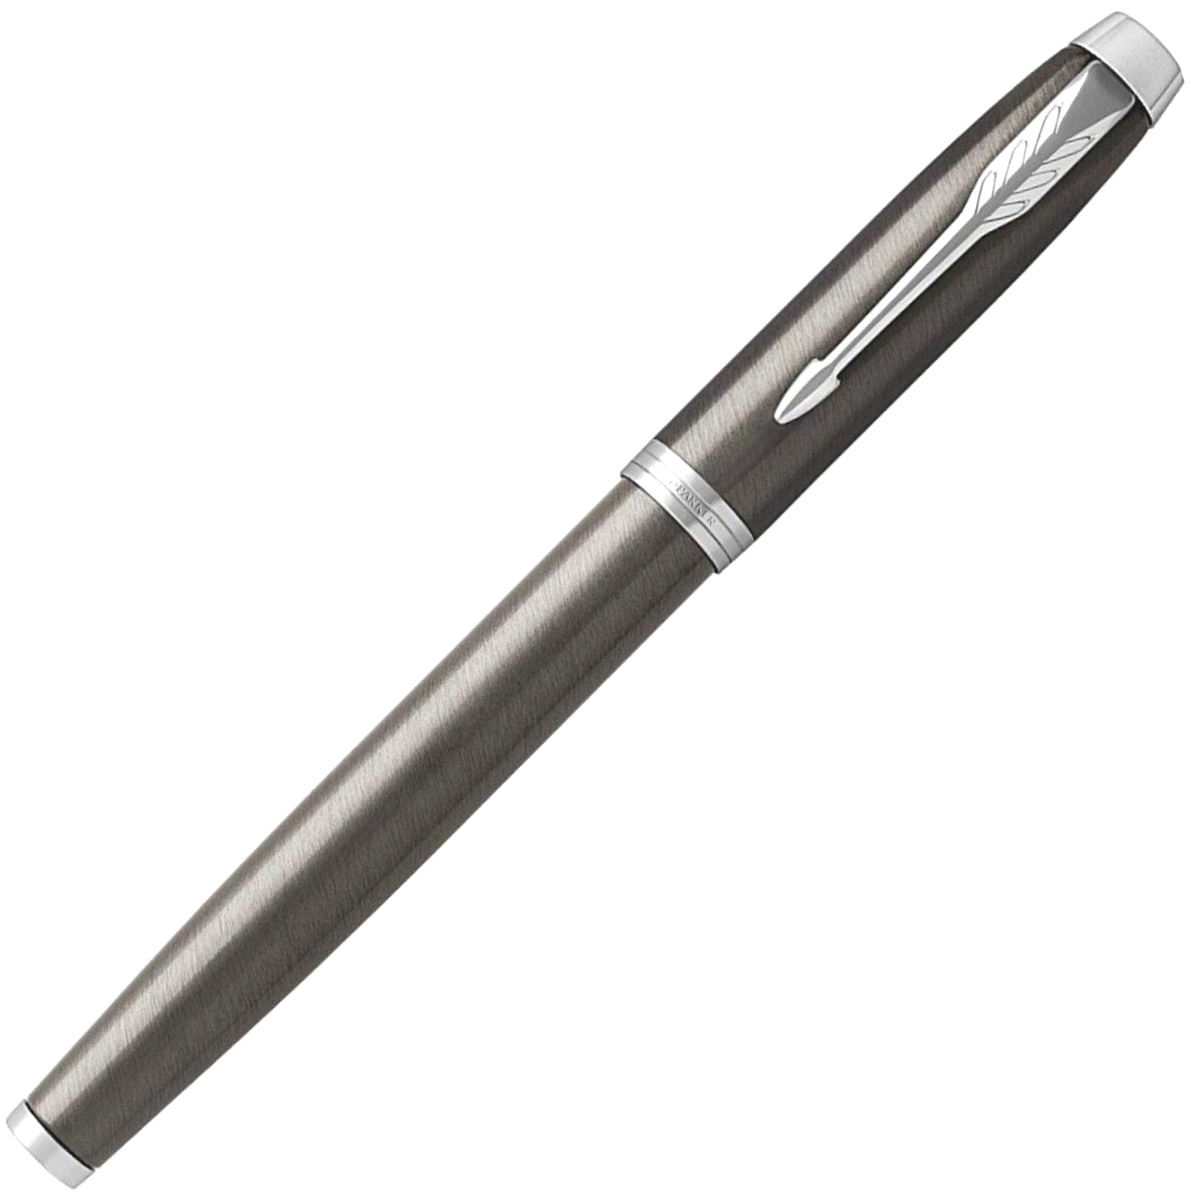  Перьевая ручка Parker IM Core F321, Dark Espresso CT (Перо F), фото 2